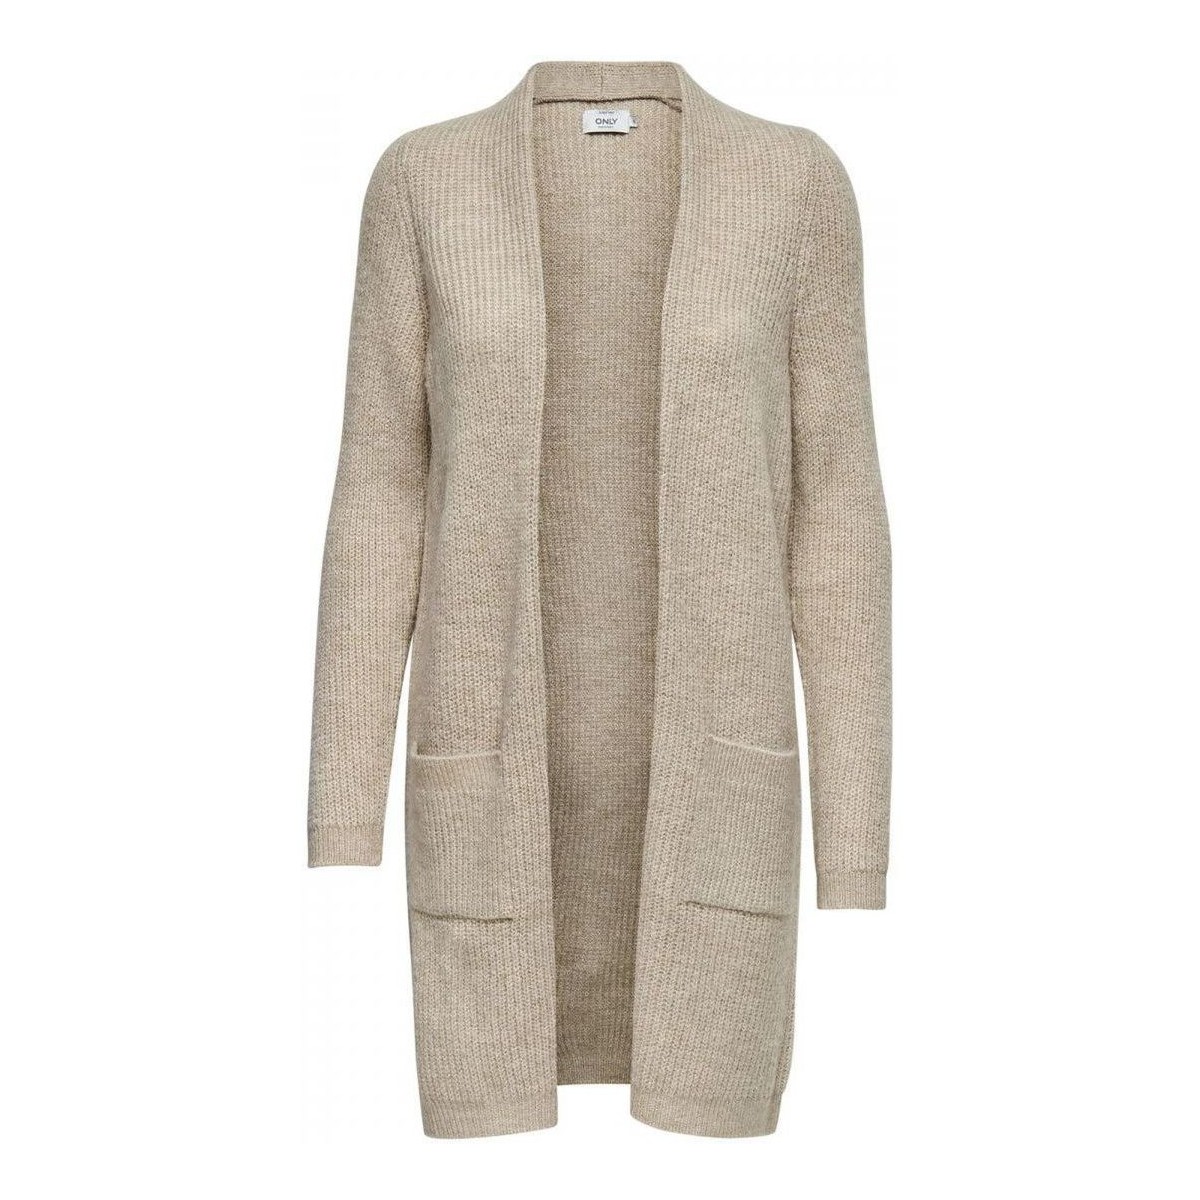 Kleidung Damen Pullover Only 15179815 JADE-WHITECAP GRAY Grau